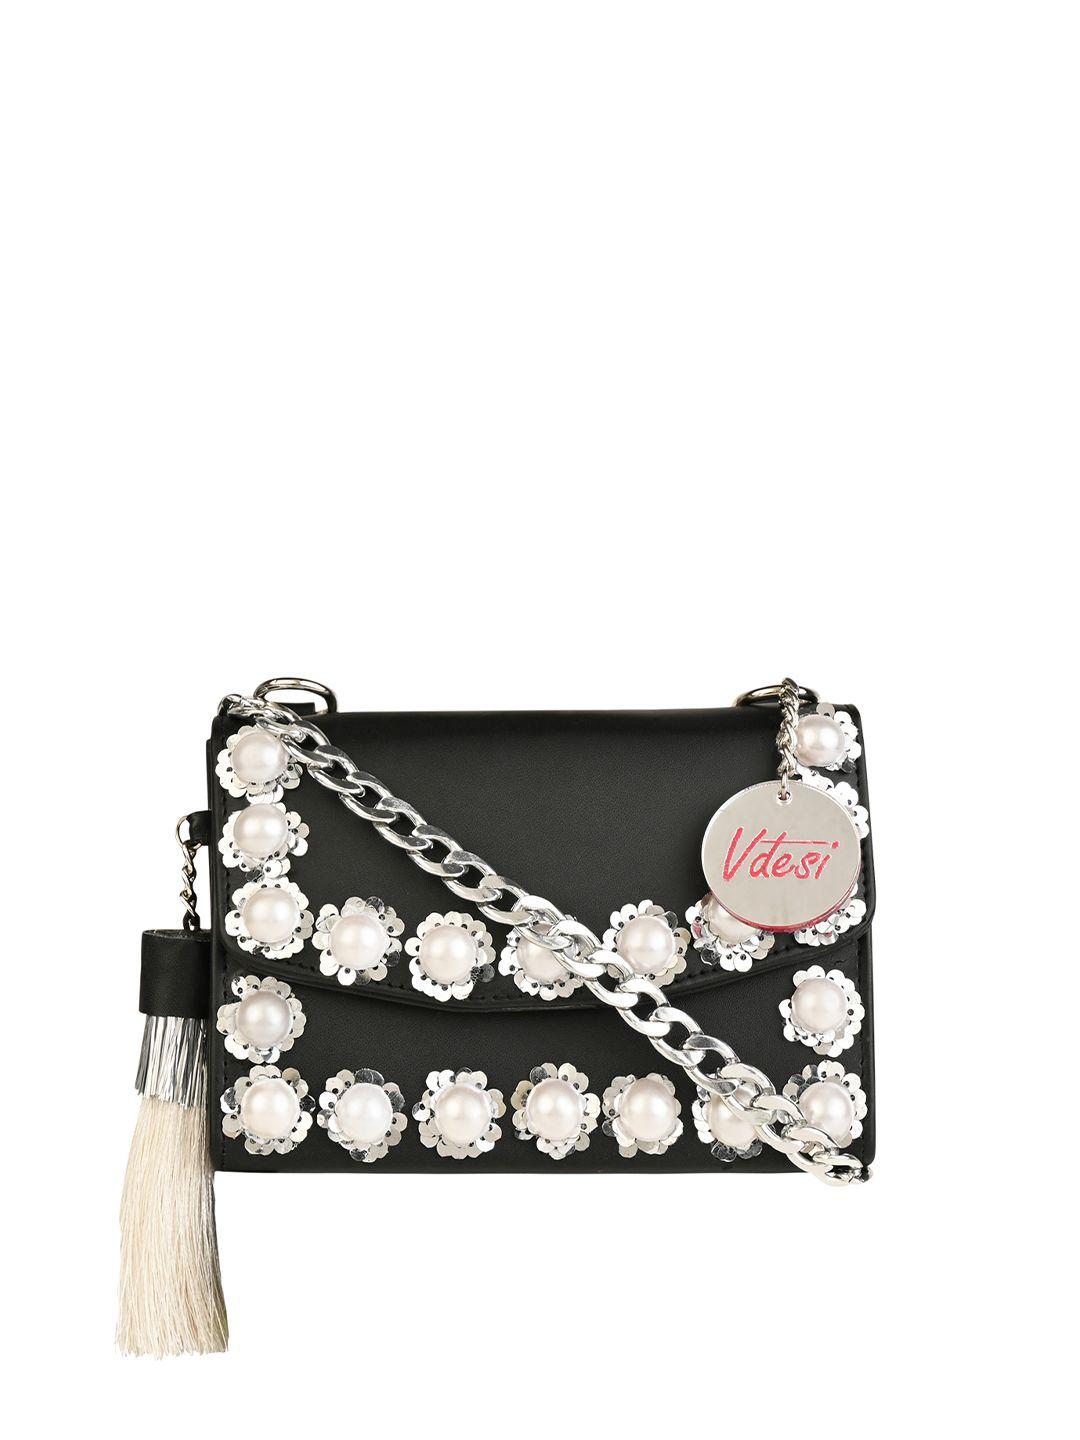 vdesi black floral pu structured sling bag with tasselled